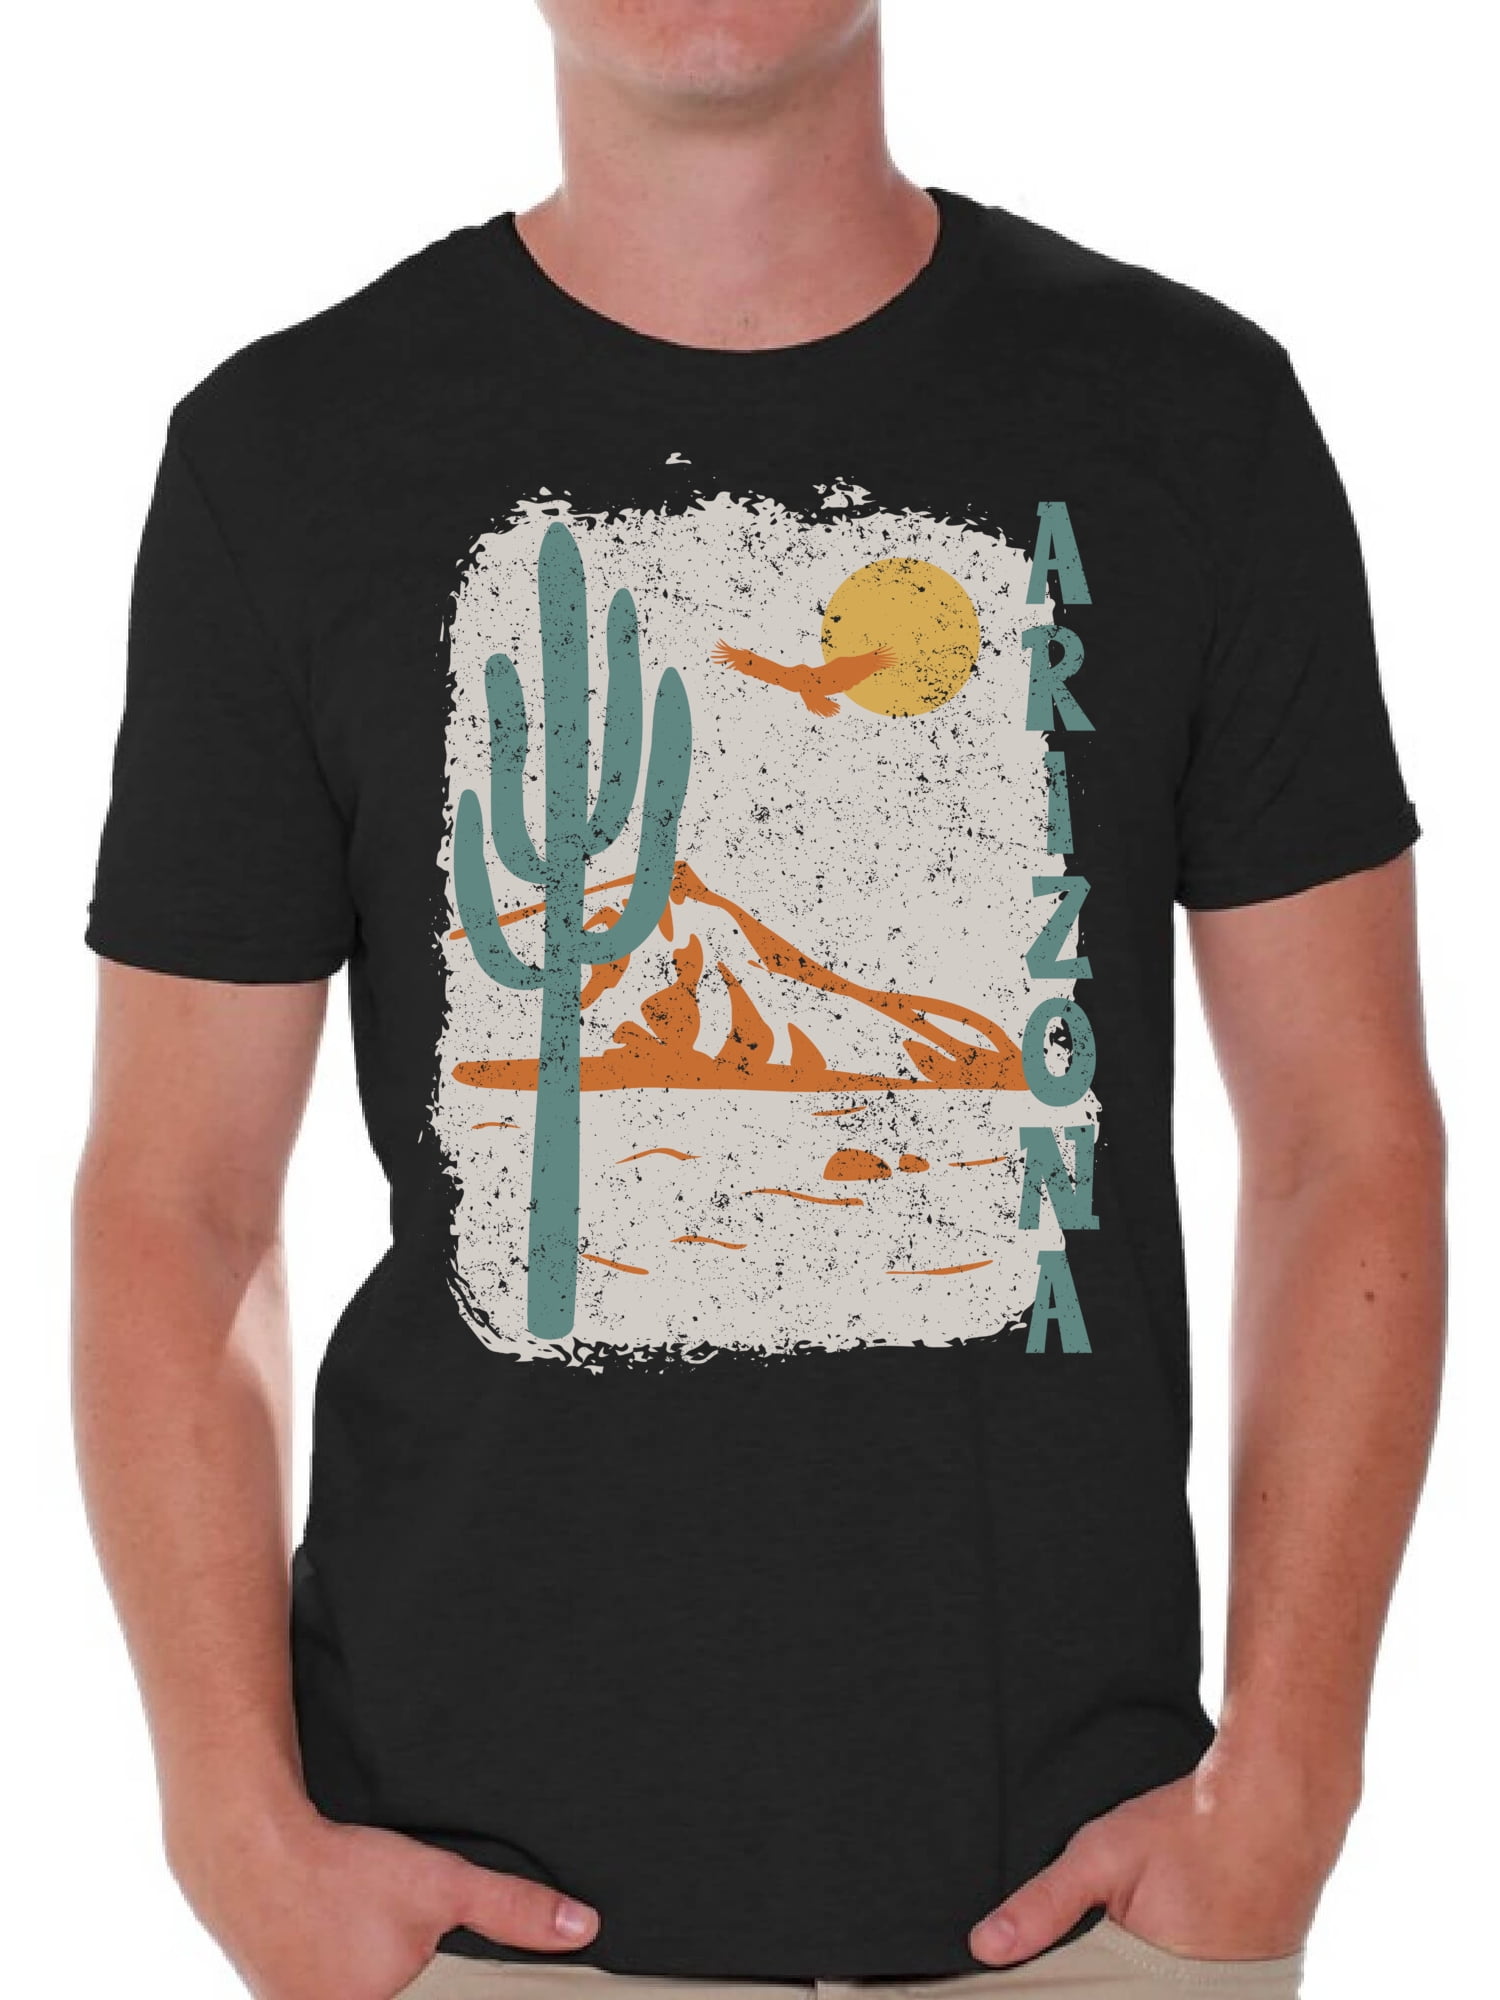 T-shirts Graphic - AZ Men State Souvenir Arizona Novelty USA Gift for -